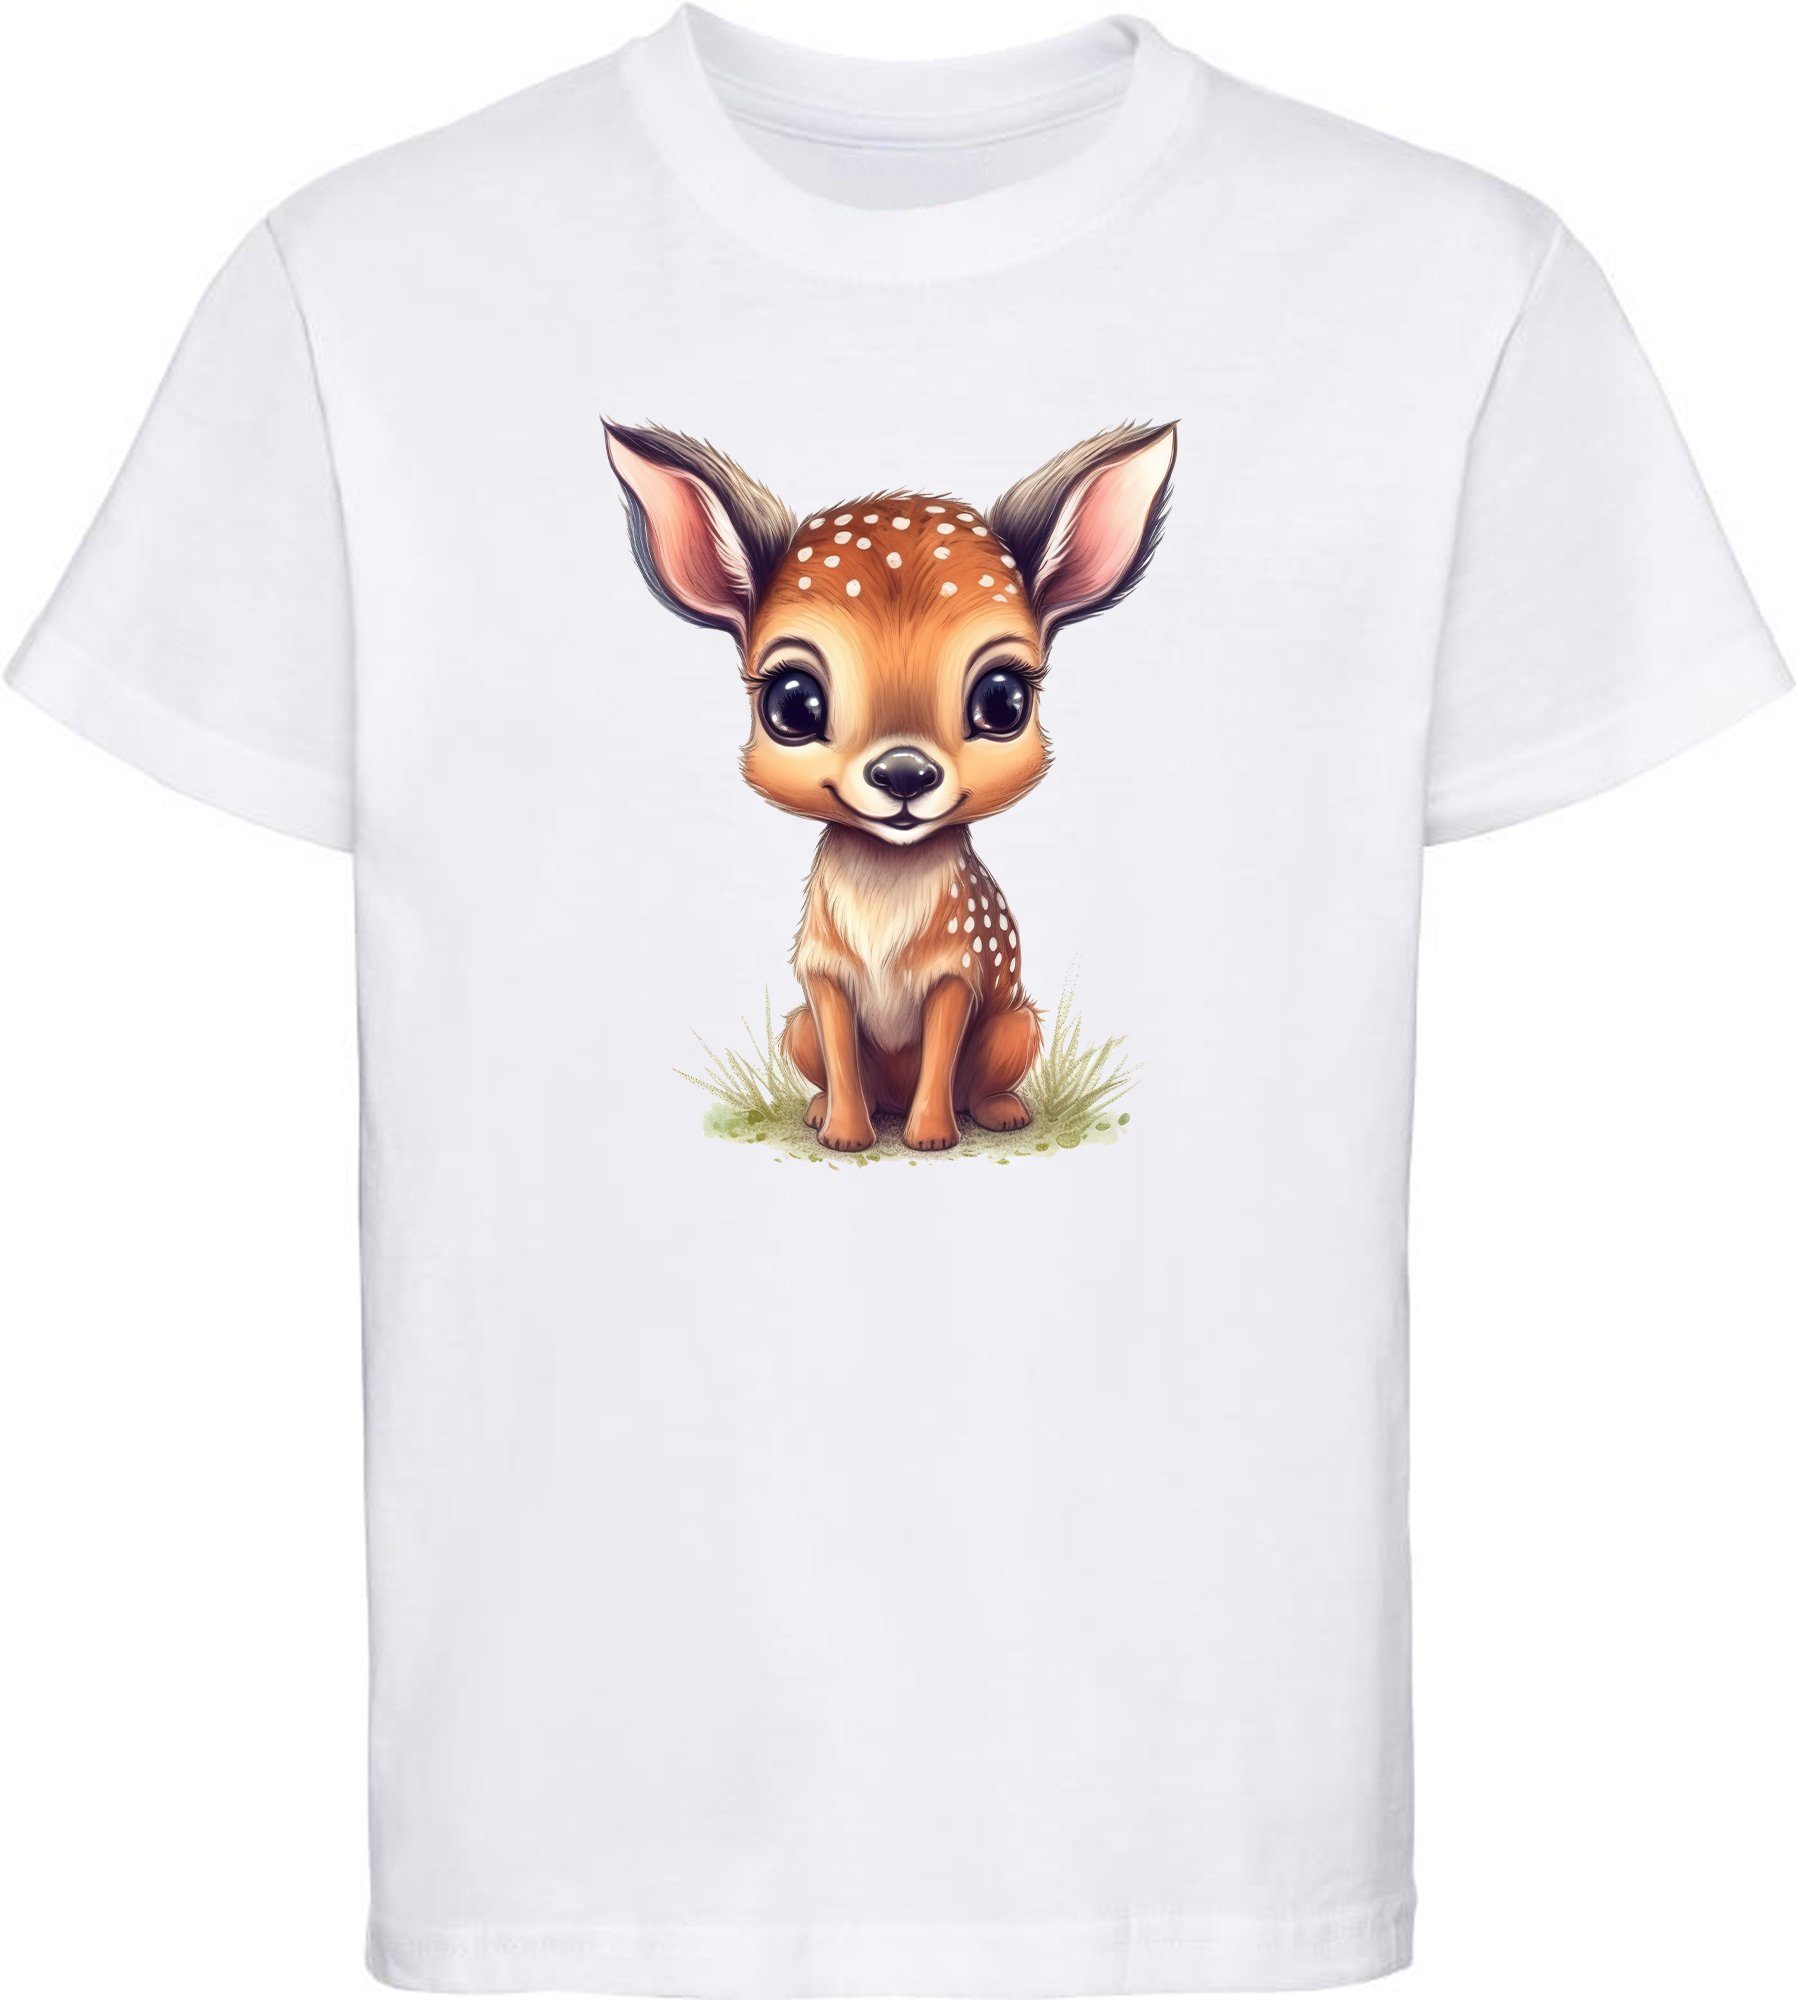 MyDesign24 T-Shirt Kinder Wildtier Print Shirt bedruckt - Baby Reh Rehkitz Baumwollshirt mit Aufdruck, i269 weiss